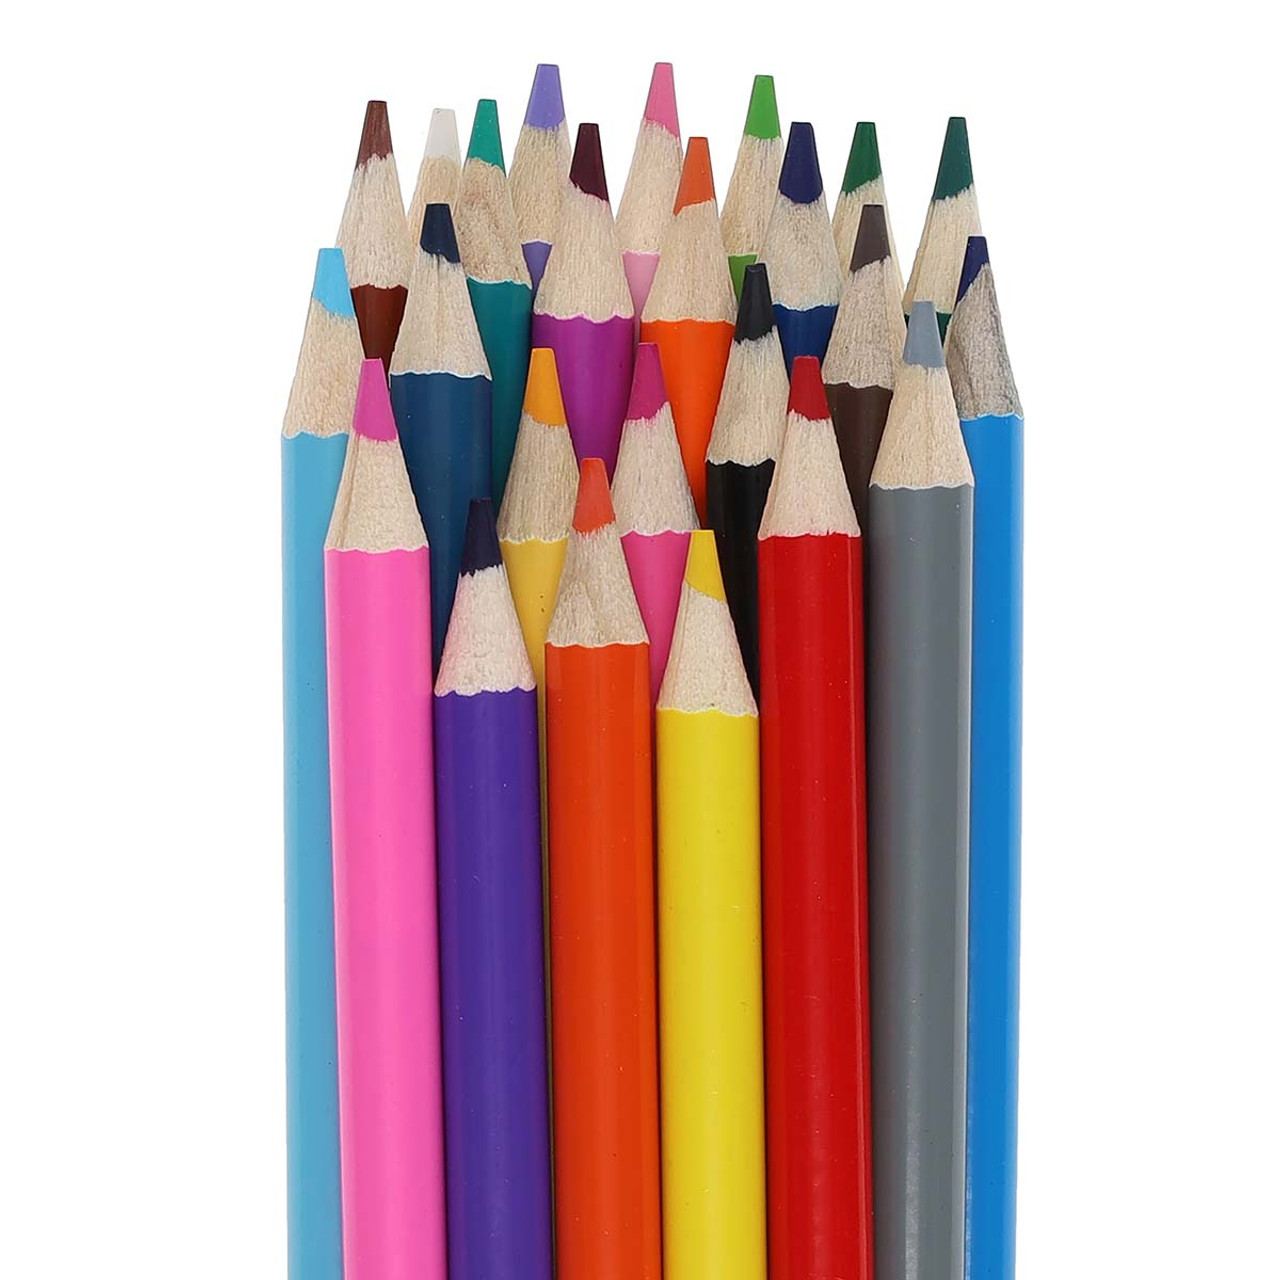  LEISURE ARTS Colored Pencils 24pc, Colored Pencils, Color  Pencil Set, Coloring Pencils, Colored Pencils for Adult Coloring Books,  Colored Pencils Bulk, Color Pencils, Colored Pencil Set : Arts, Crafts &  Sewing